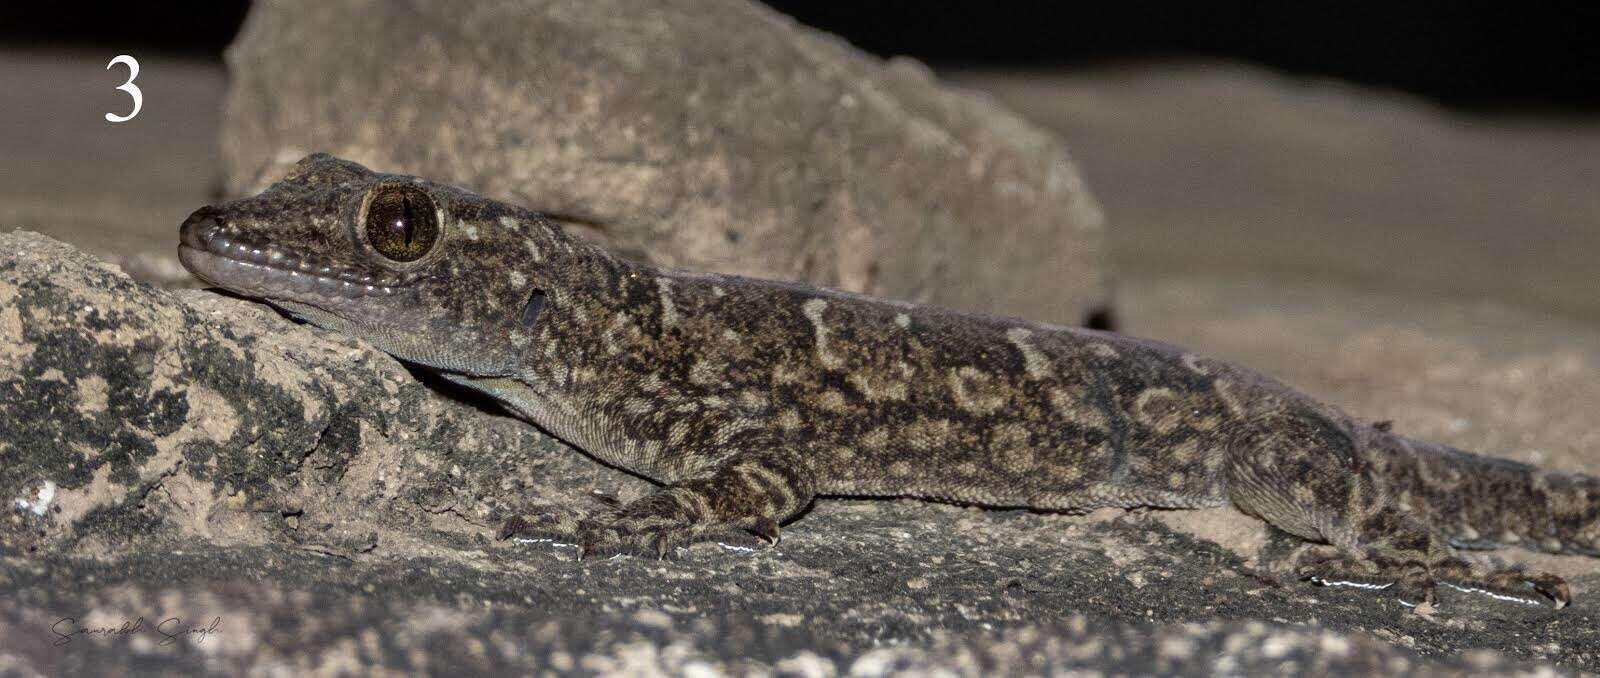 Image de Hemidactylus yajurvedi Murthy, Bauer, Lajmi, Agarwal & Giri 2015